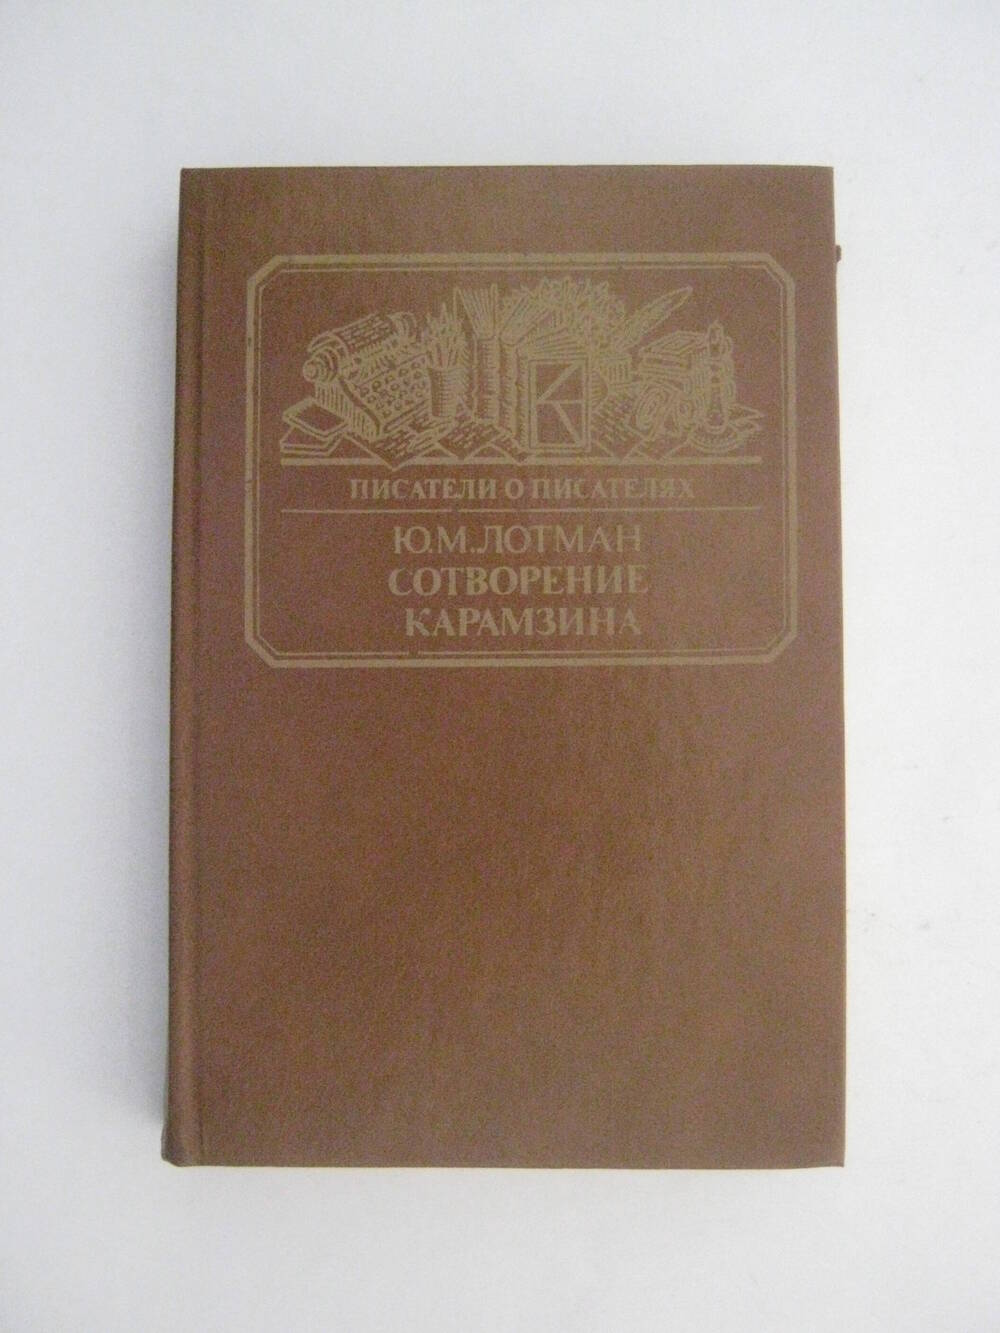 Книга. Писатели о писателях. Лотман Ю.М. Сотворение Карамзина. – М.: Книга, 1987.